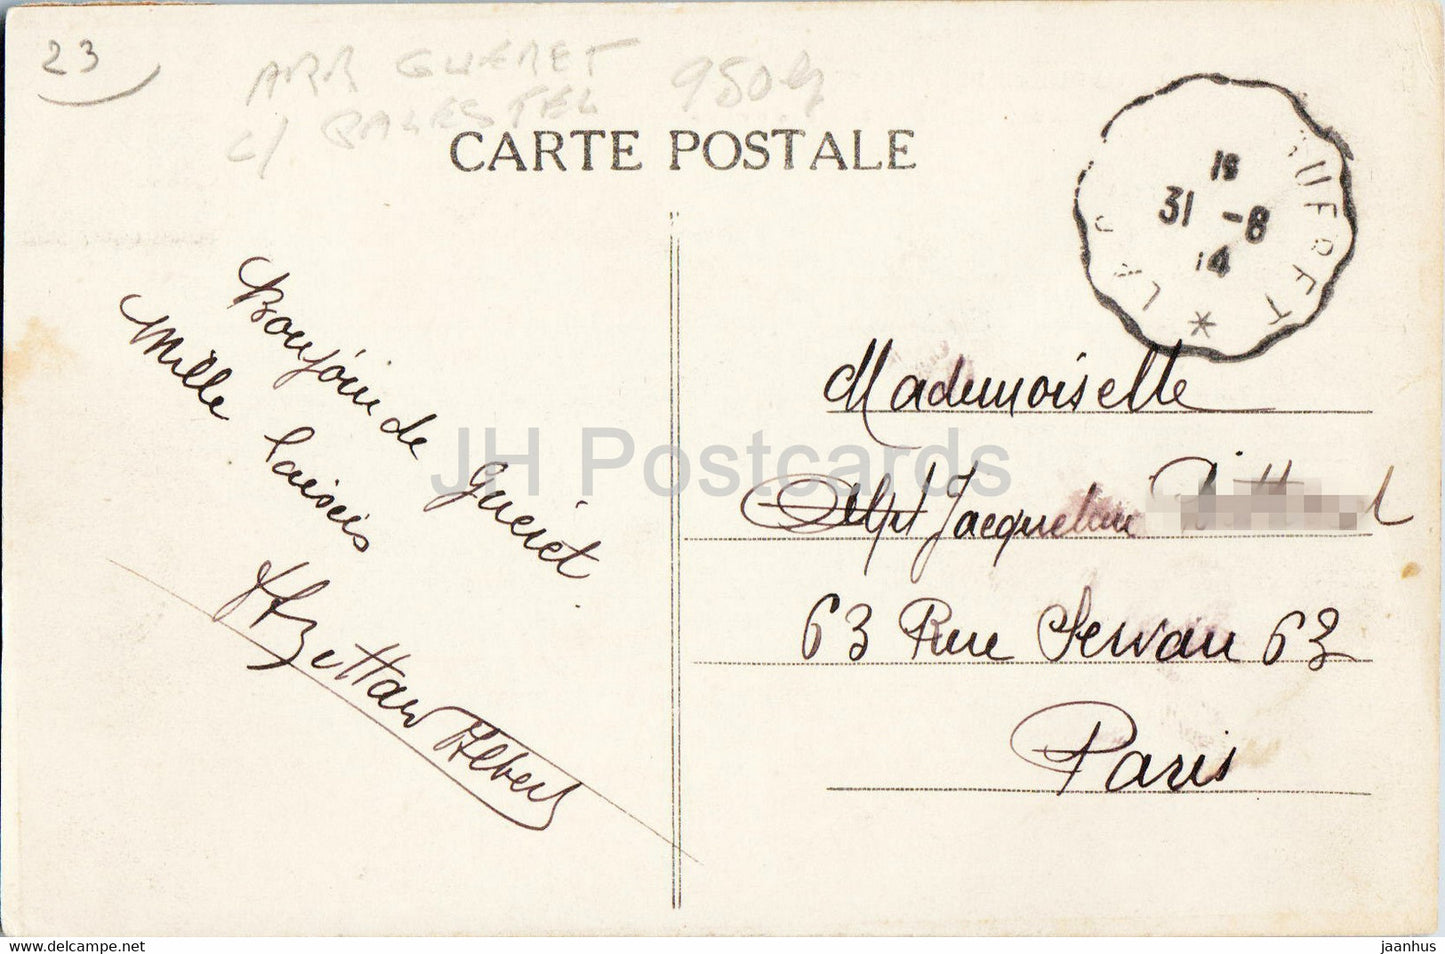 Crozant - Les Ruines - La Creuse Pittoresque - 953 - old postcard - 1914 - France - used